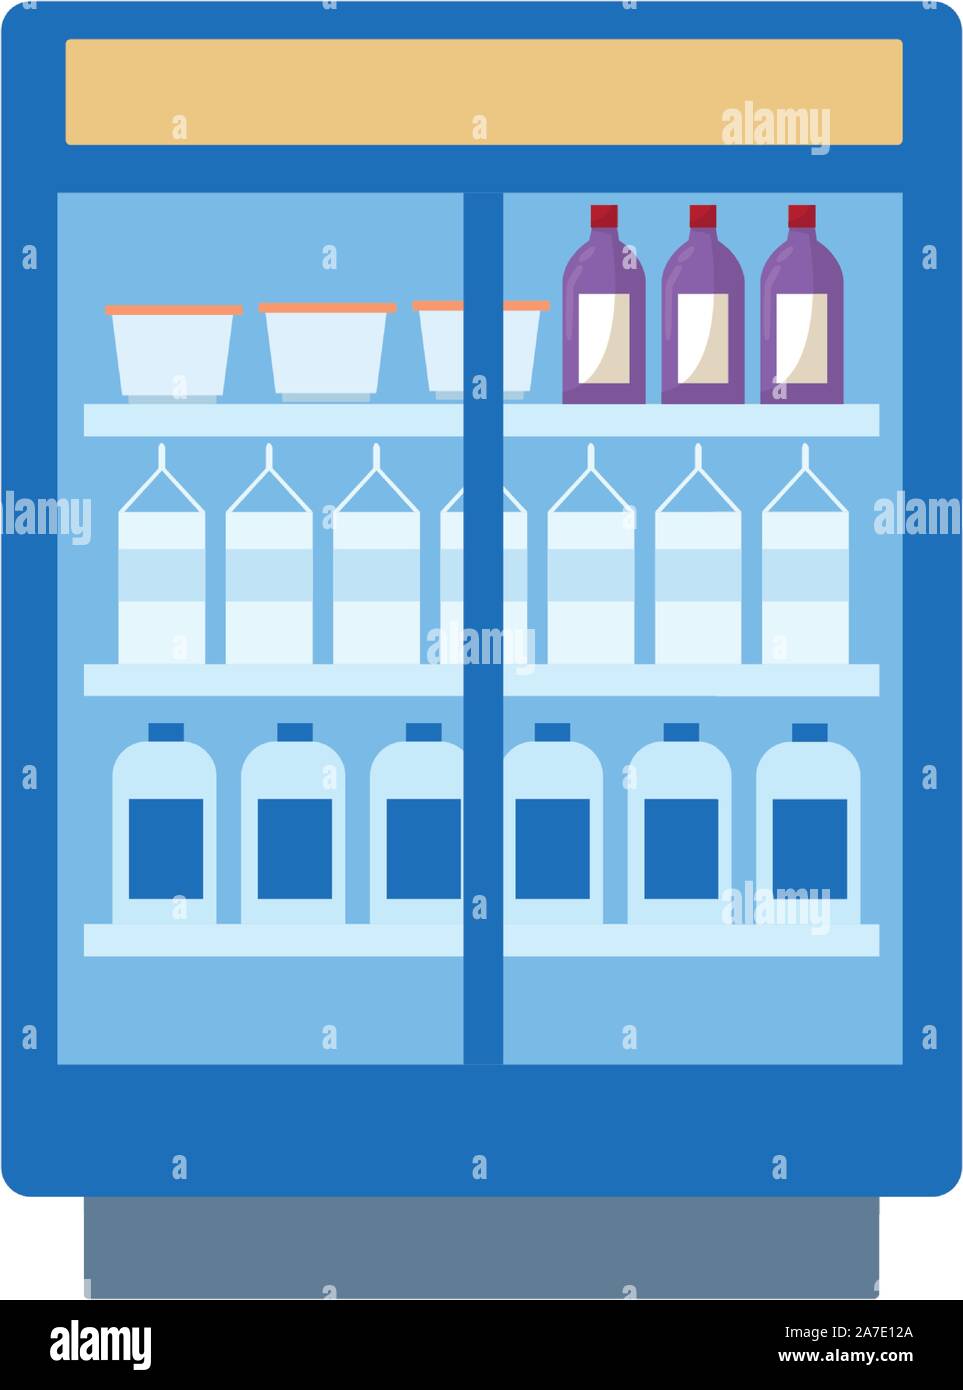 Modern commercial display fridge. Supermarket freezer equipment for drinks  vector template. Refrigerator equipment for supermarket, appliance freeze  for beverage and food illustration Stock Vector Image & Art - Alamy